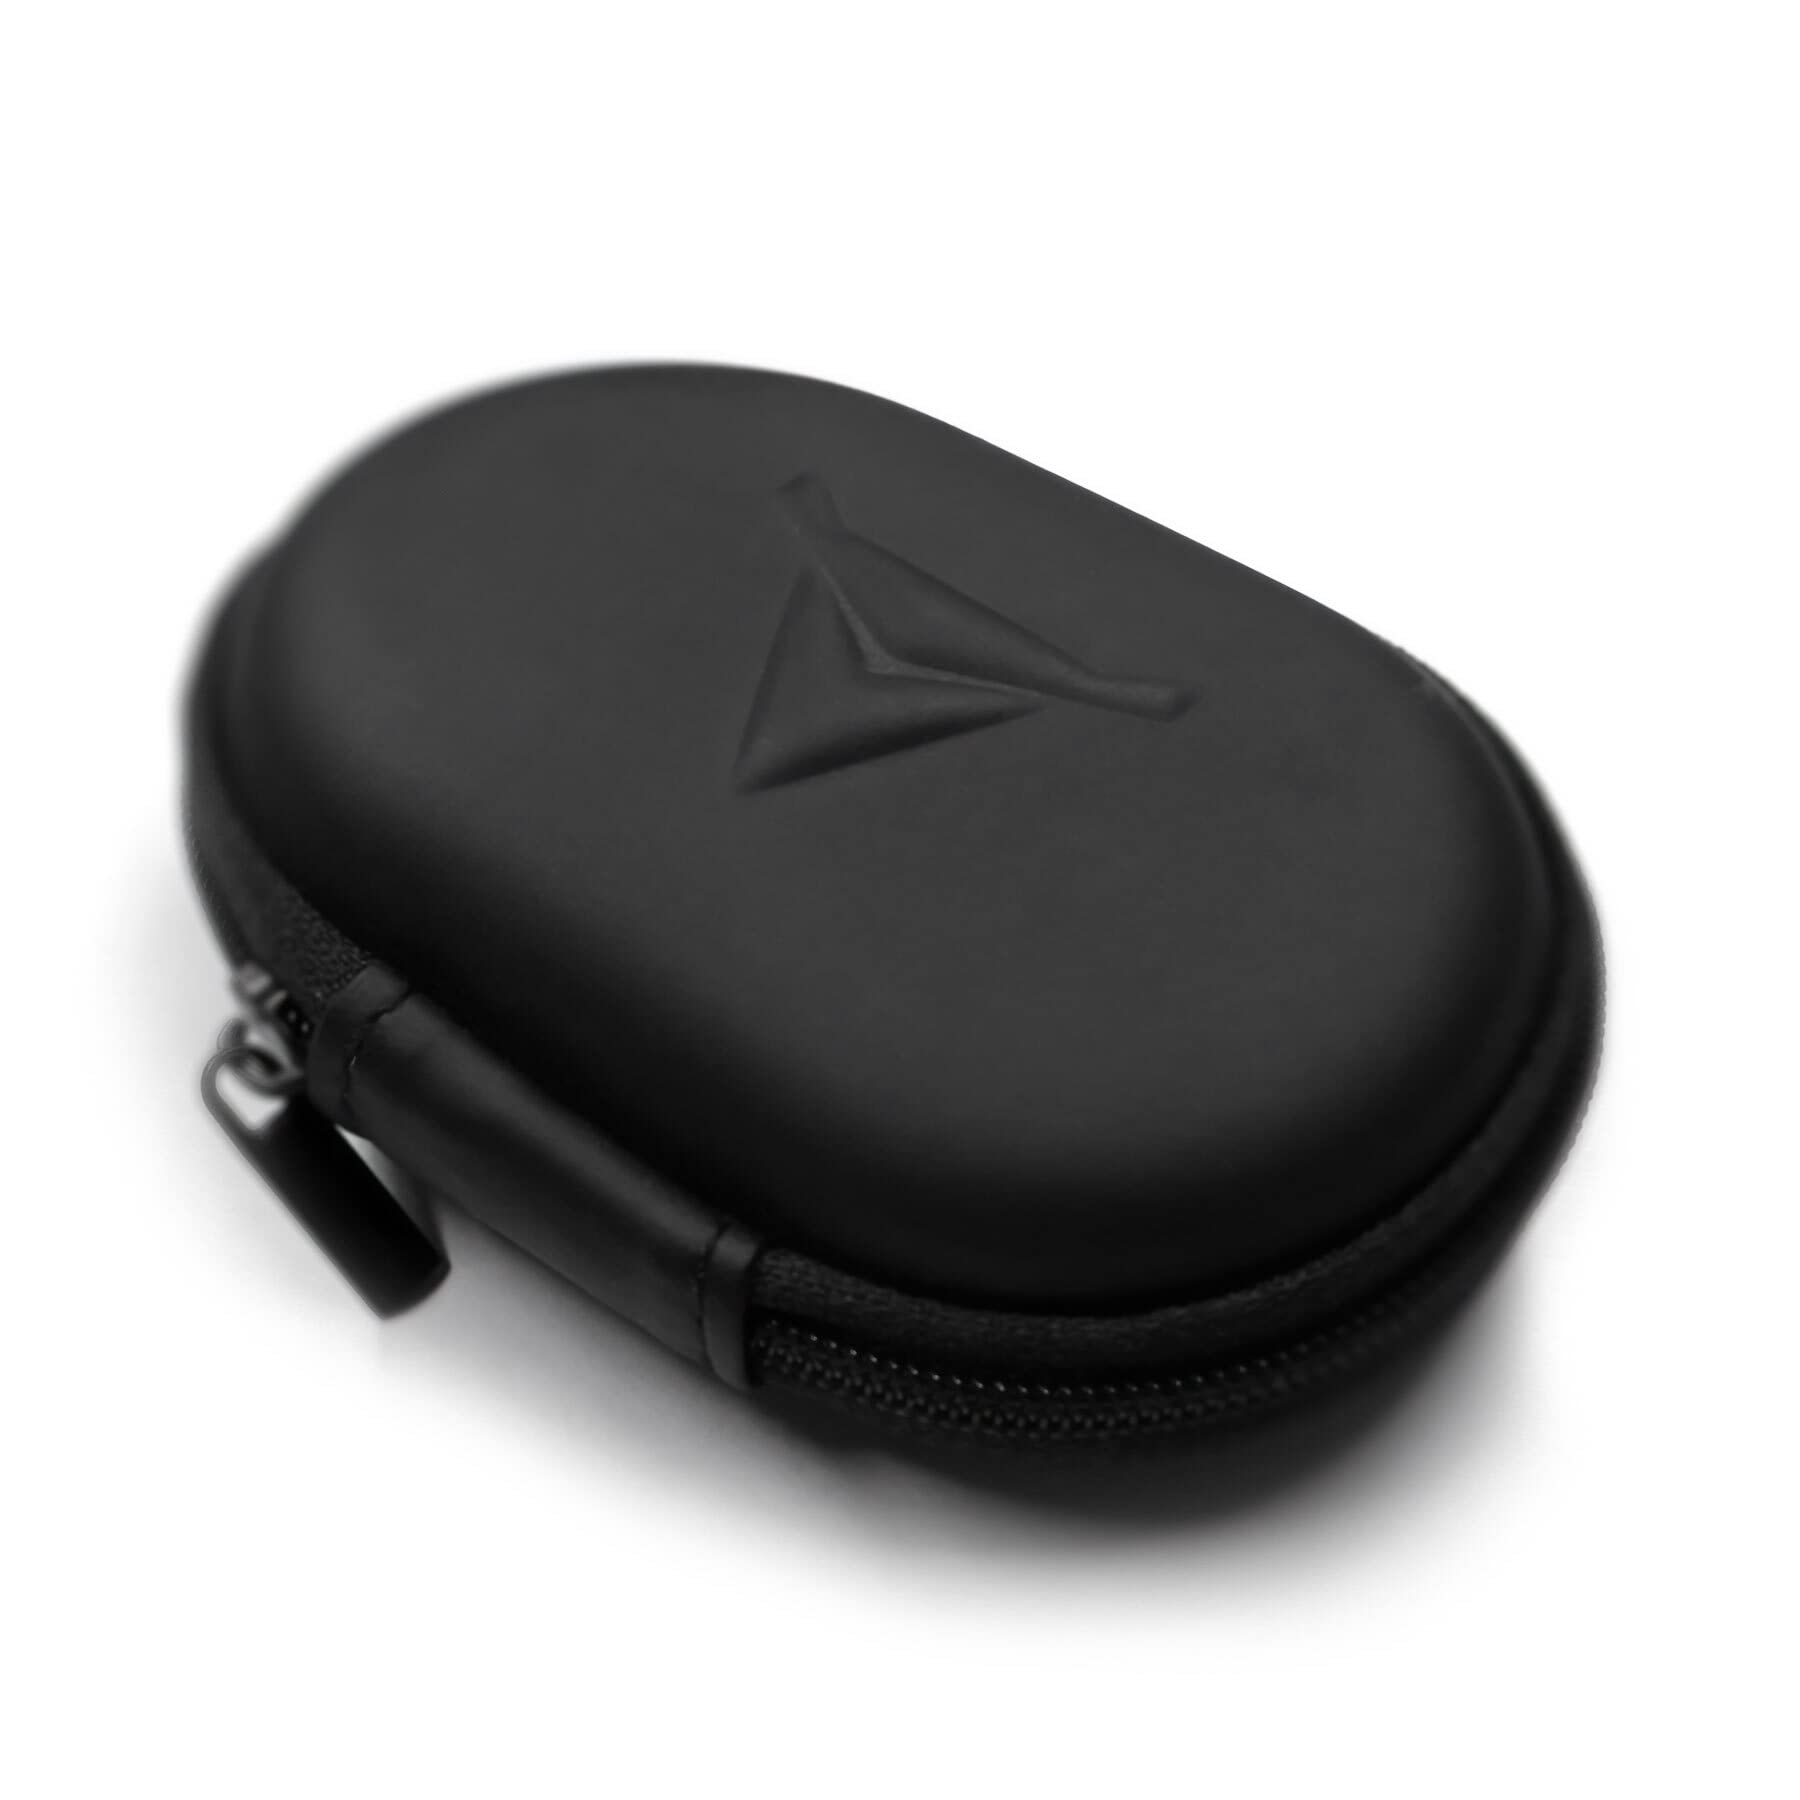 Decibullz Custom Molded Earplugs Pro Pack (Black) Bundle